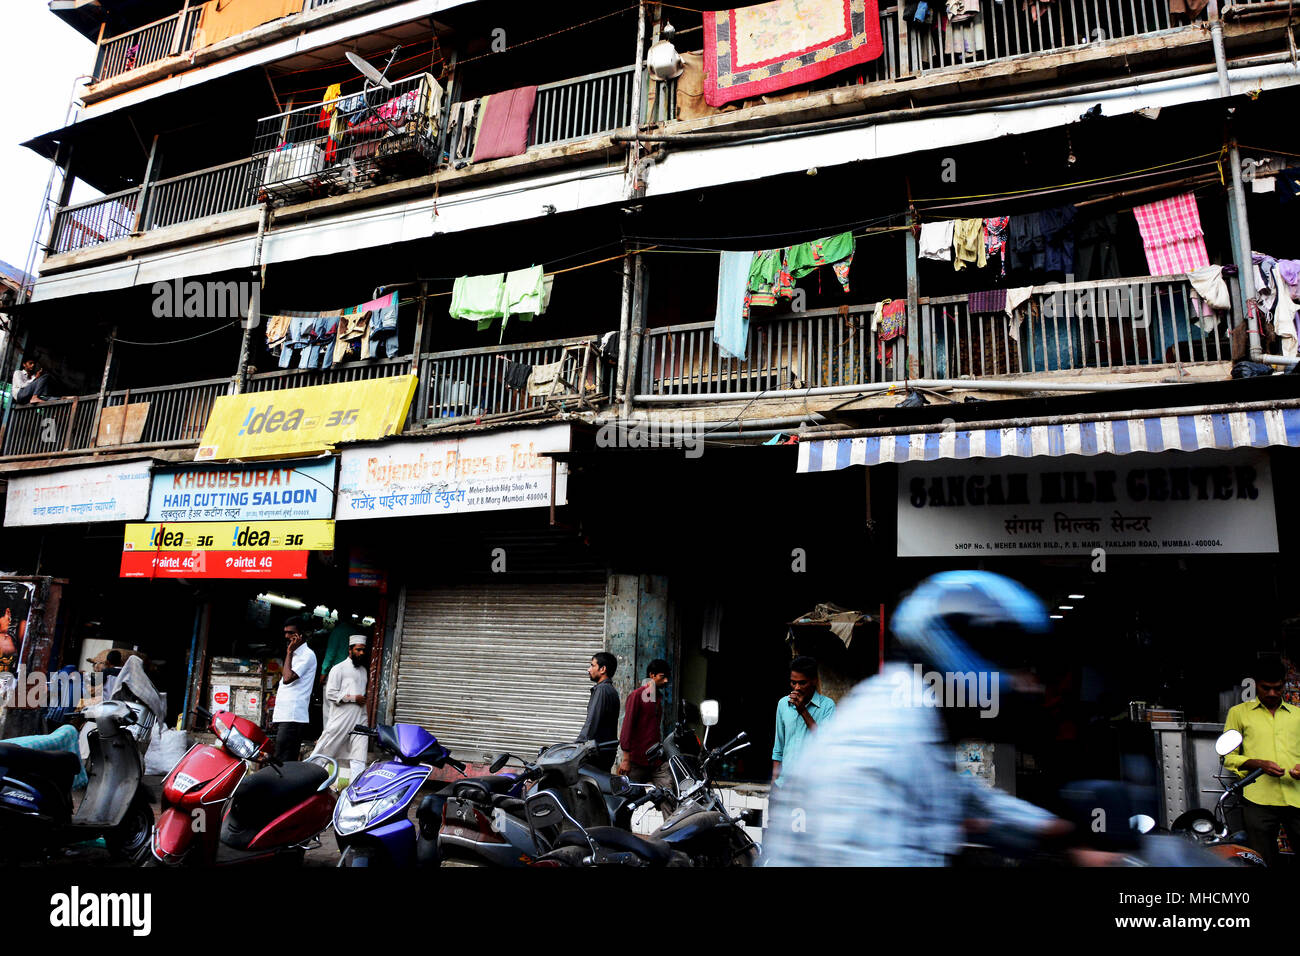 A busy street scene in Mumbai, India Stock Photo